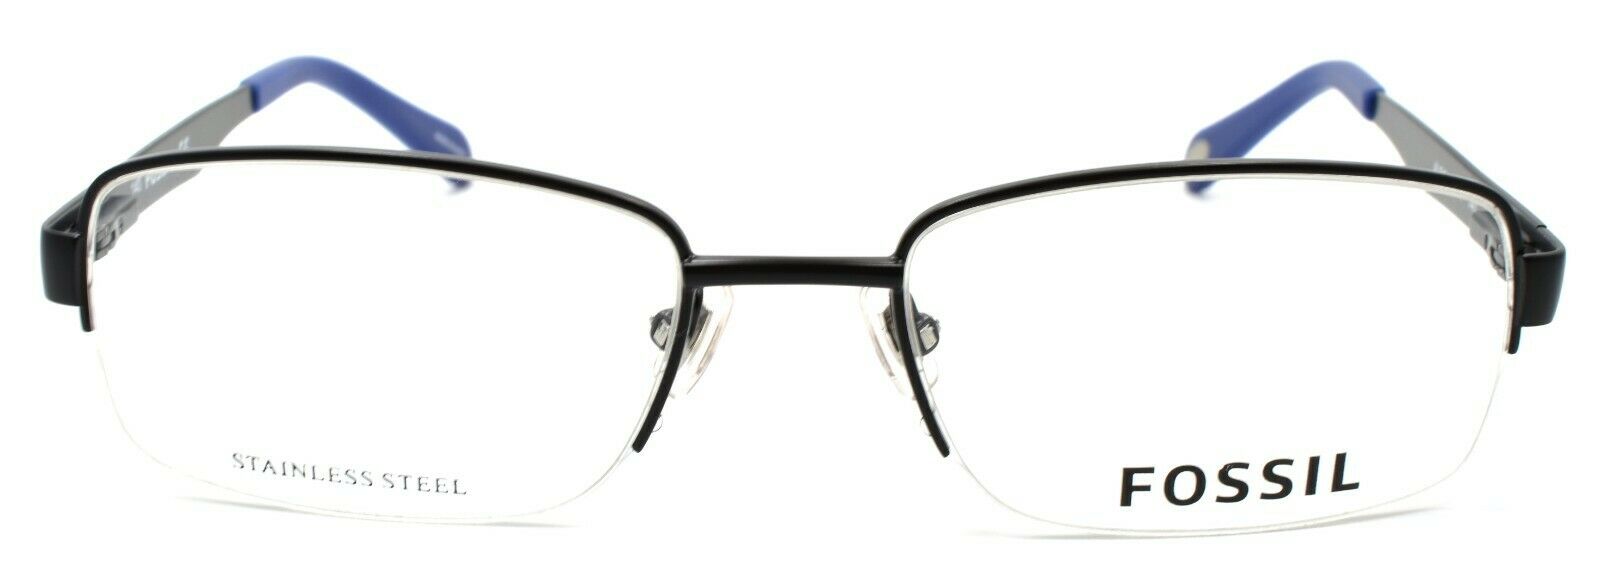 2-Fossil Aldo 0EV7 Men's Eyeglasses Frames Half-rim 52-18-140 Matte Black-716737461976-IKSpecs